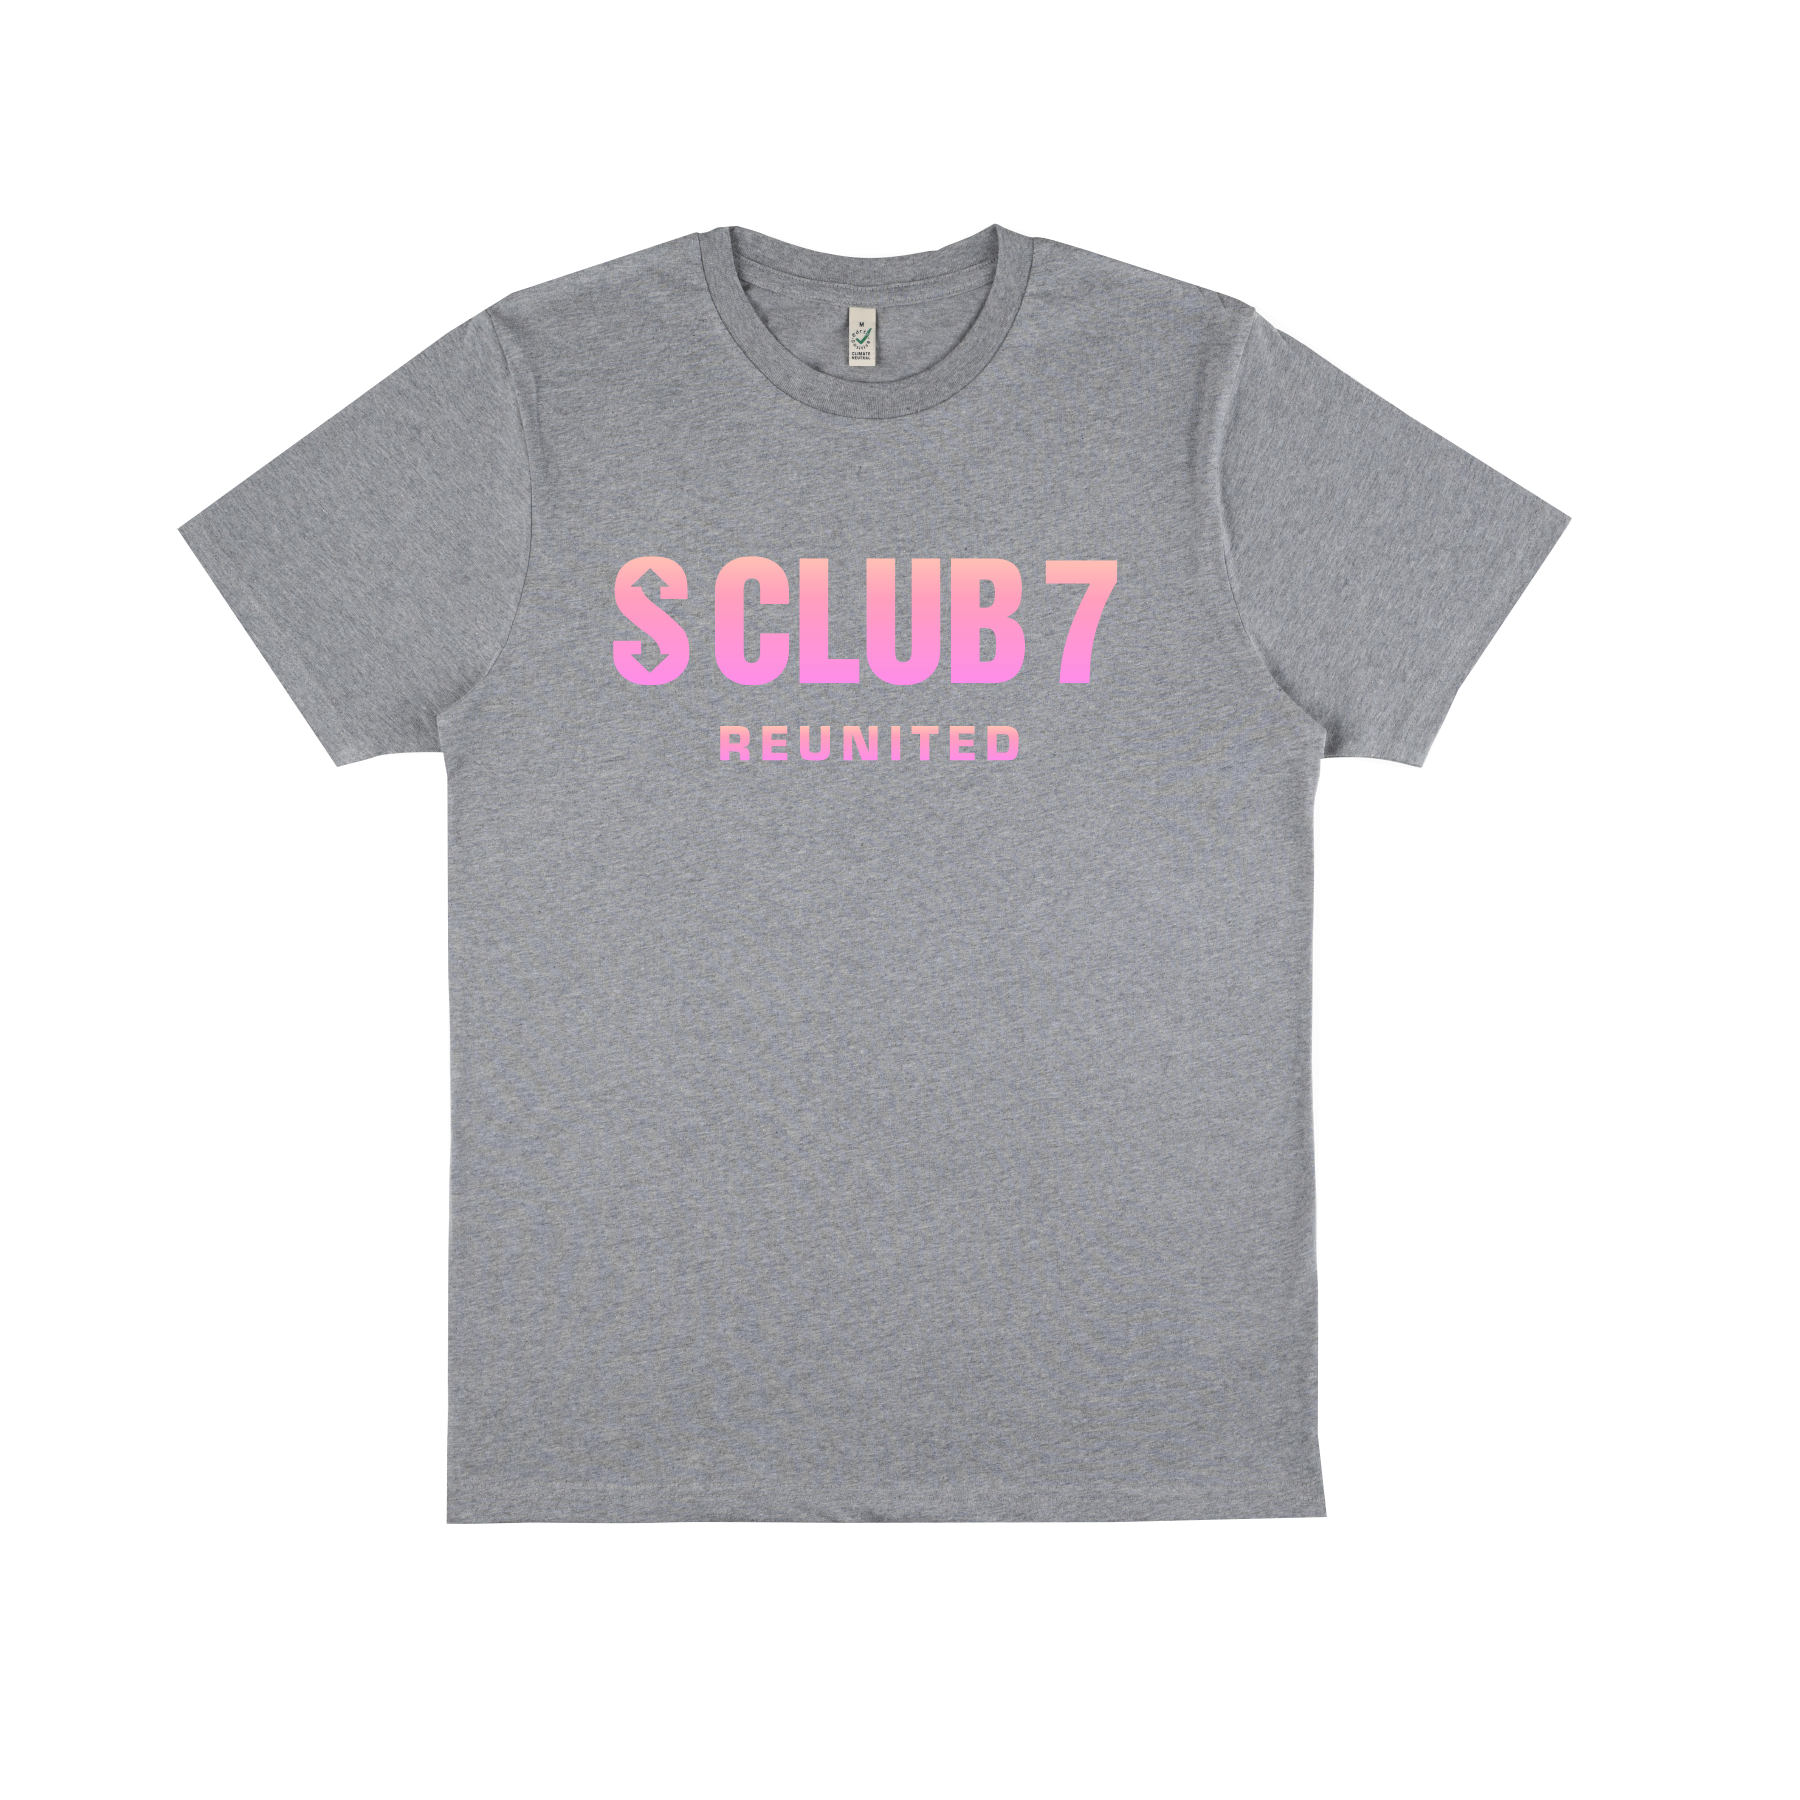 S Club 7 - Official Grey Sunset Logo T-shirt